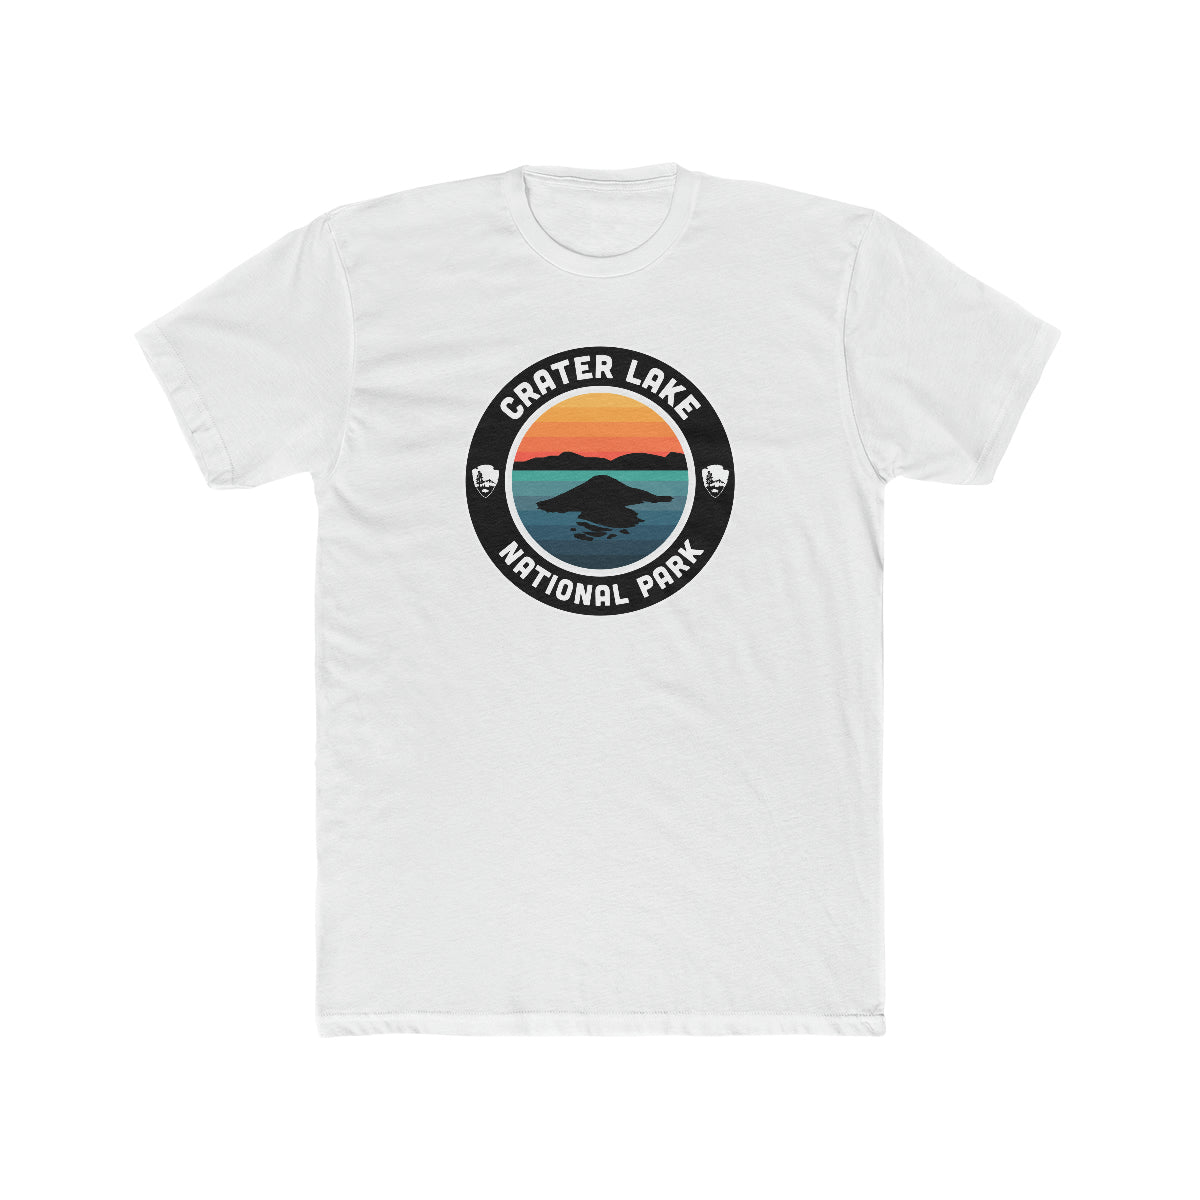 Crater Lake National Park T-Shirt - Round Badge Design